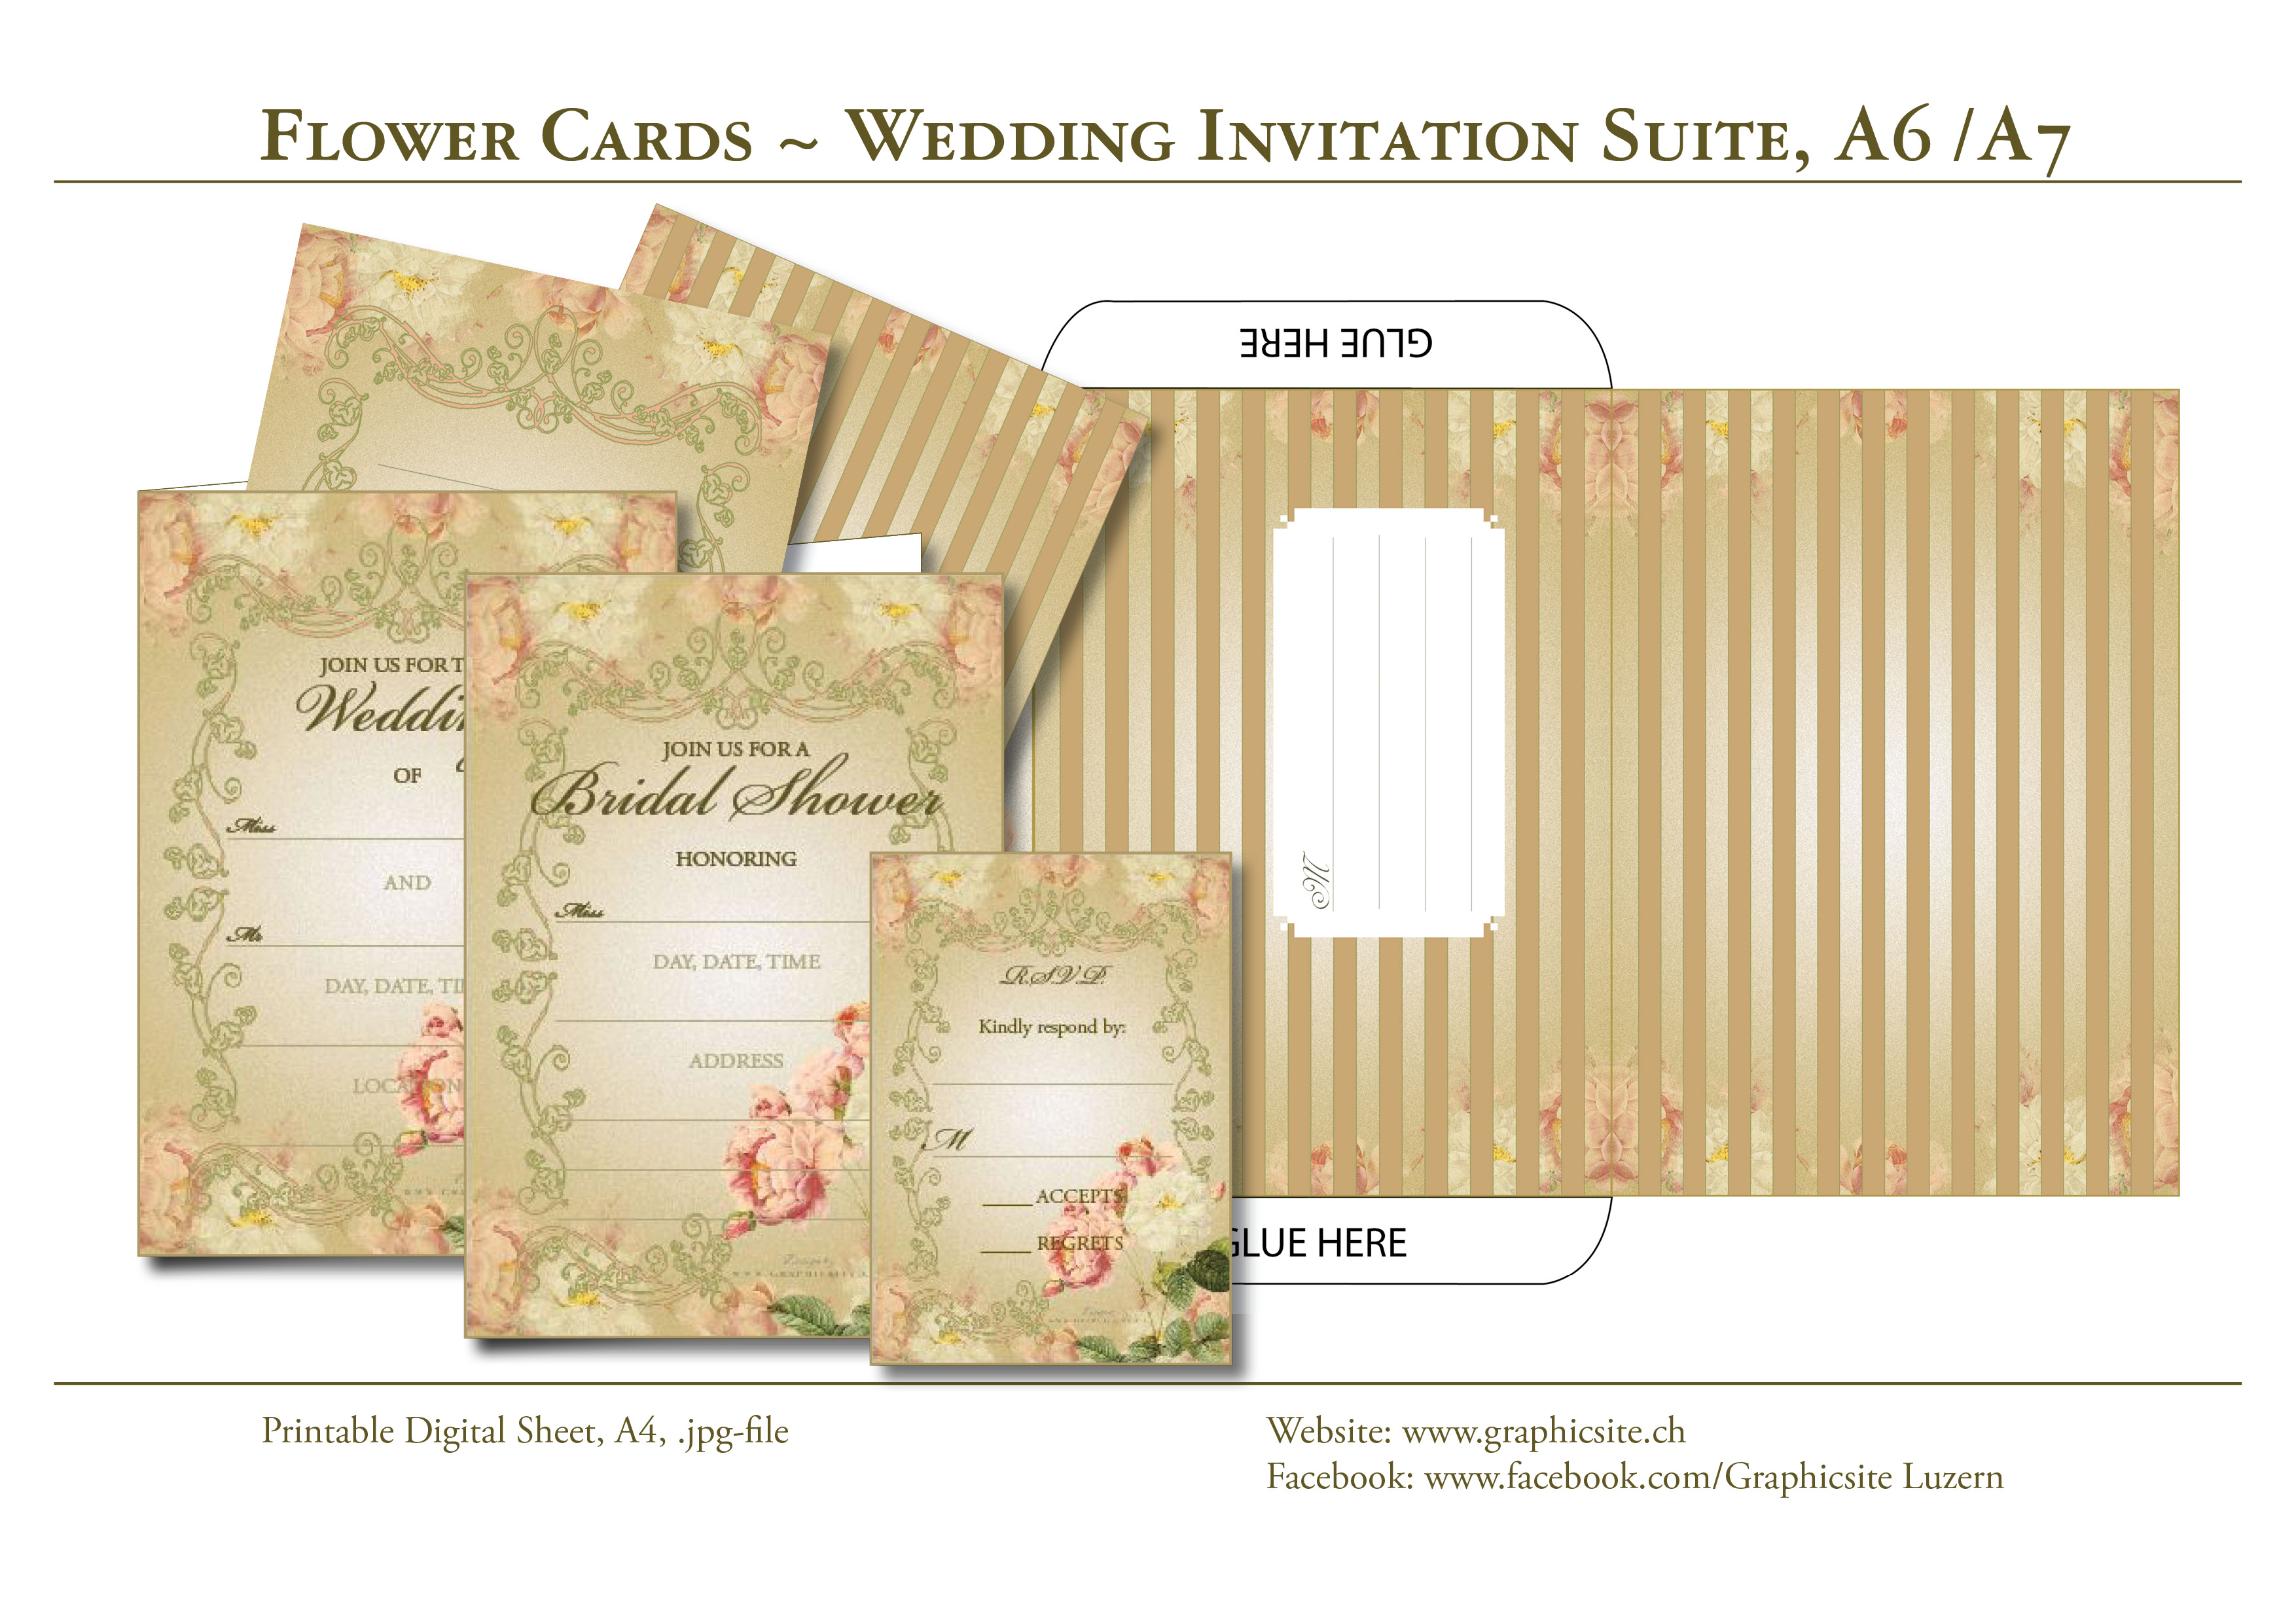 Printable Digital Sheets - DIN A-Collection - FlowerCards Wedding Invitation Suite - flowers, floral, roses, wedding, invitation, cards, stationary, graphic design, luzern, Schweiz,